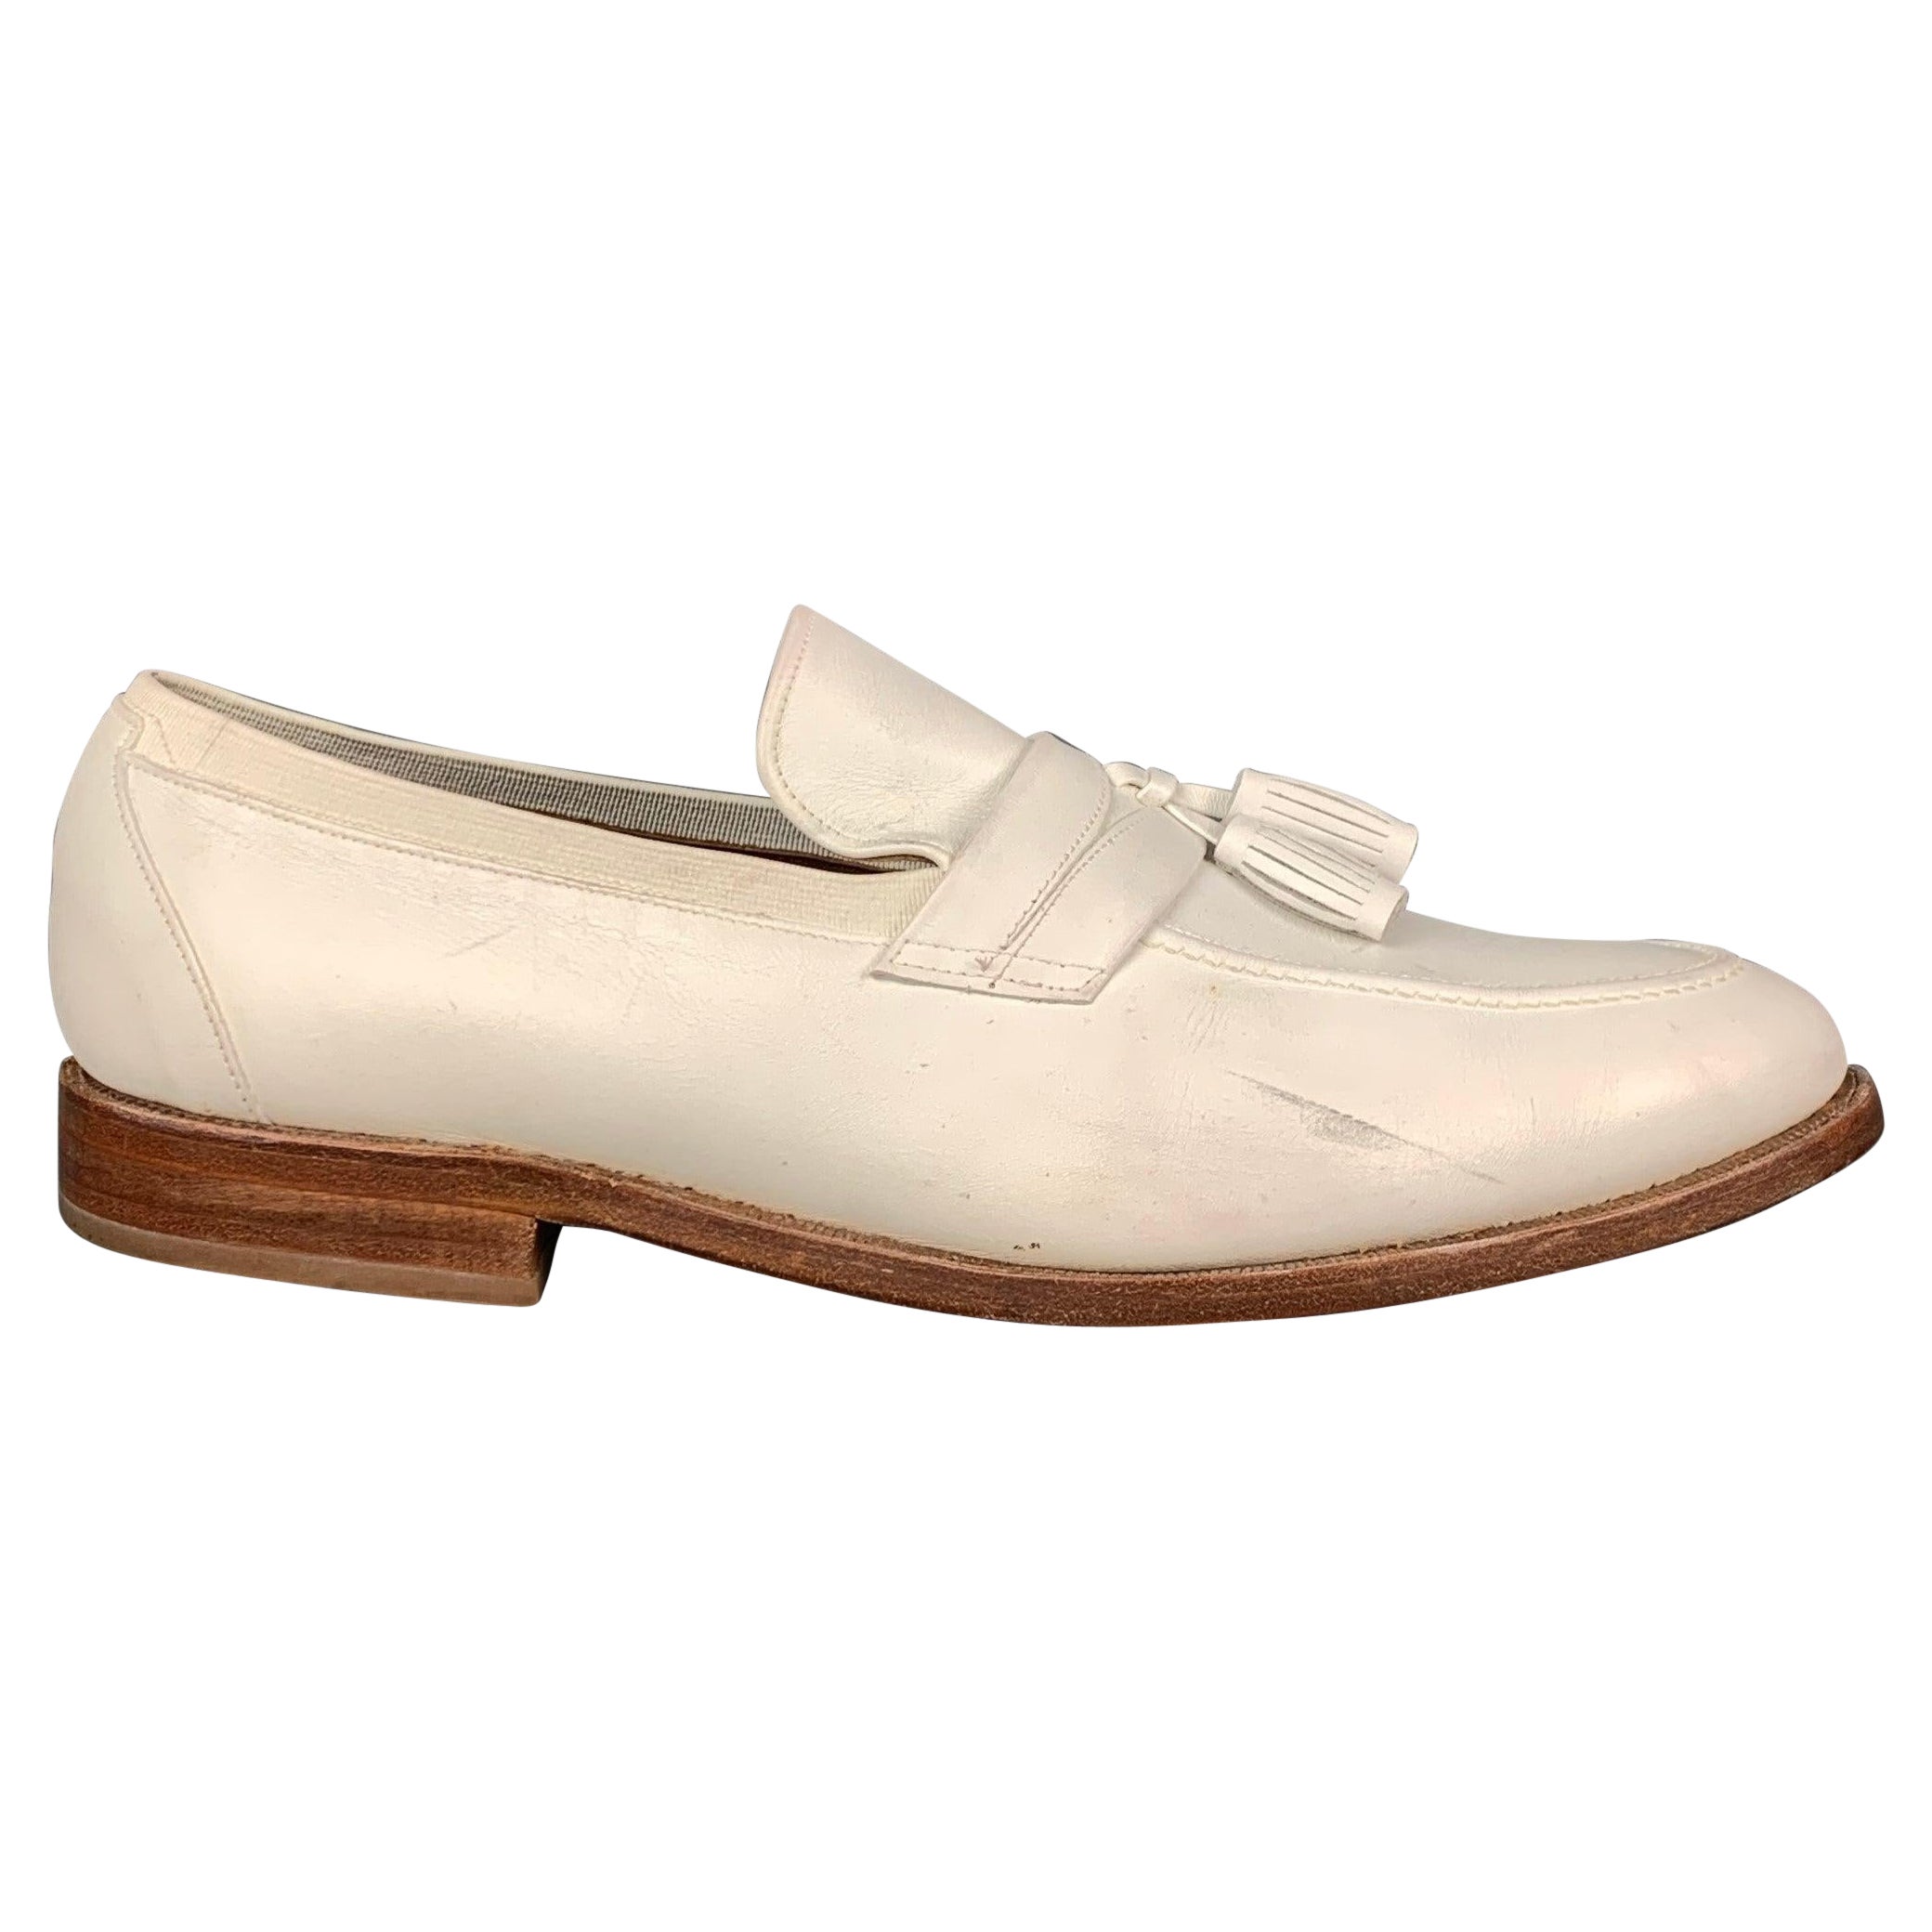 ALLEN EDMONDS Size 10.5 White Leather Tassels Loafers For Sale